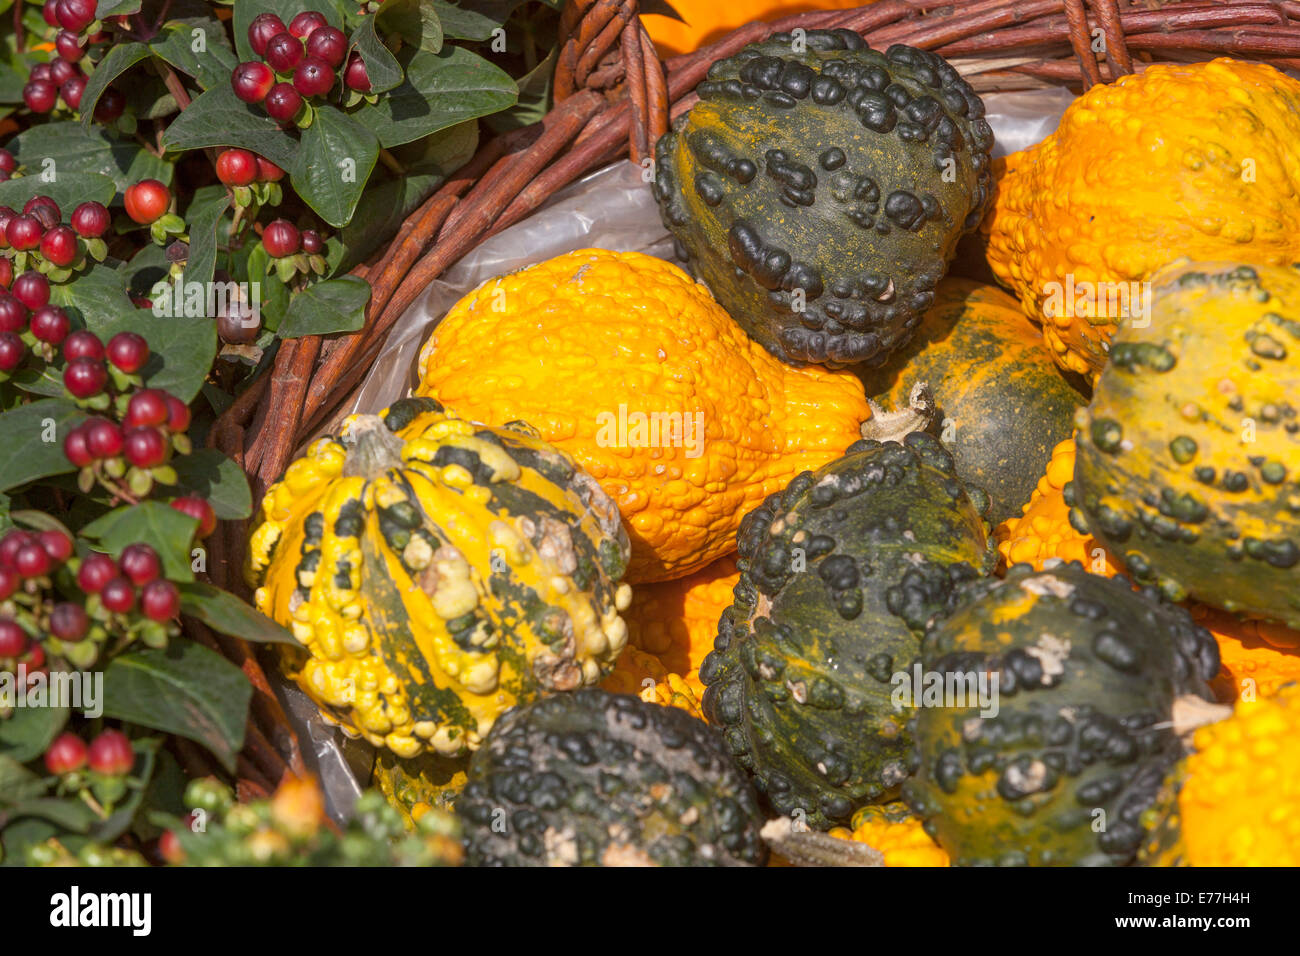 Pumpkins, squash Ornamental gourd garden plants, Decorative display Cucurbita pepo Stock Photo